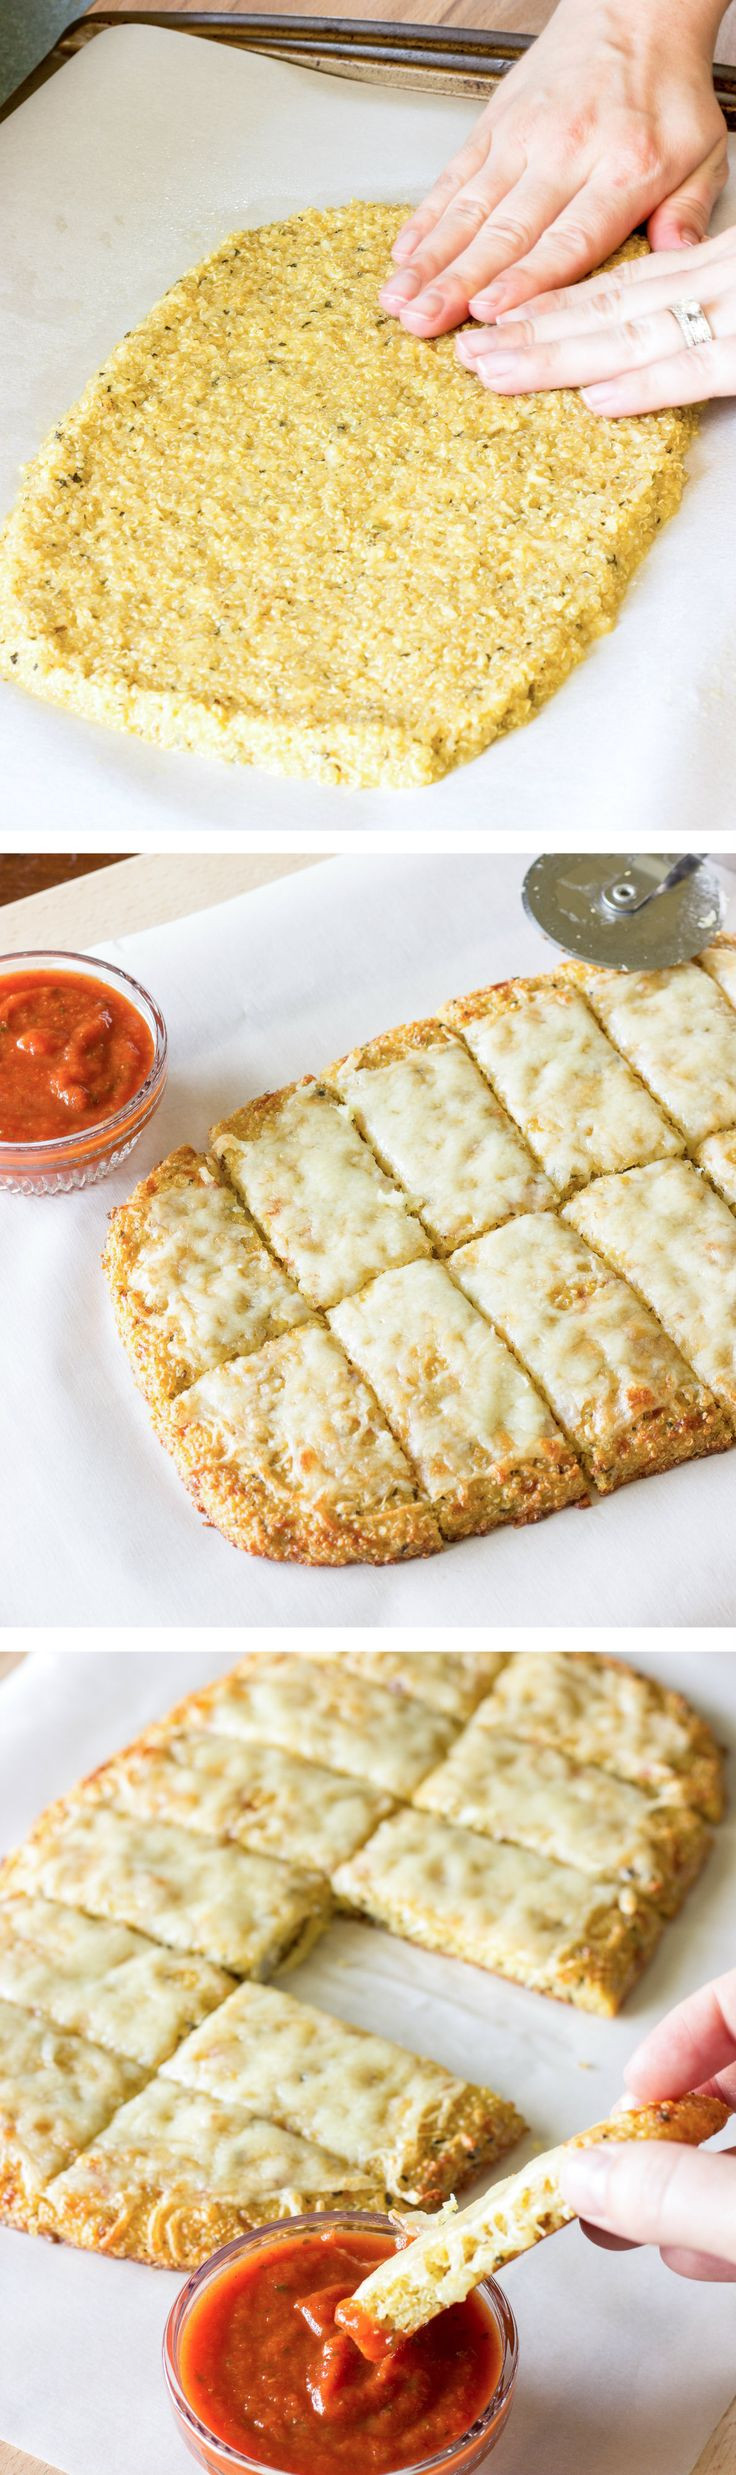 Healthy Garlic Bread
 Best 25 Alkaline t recipes ideas on Pinterest